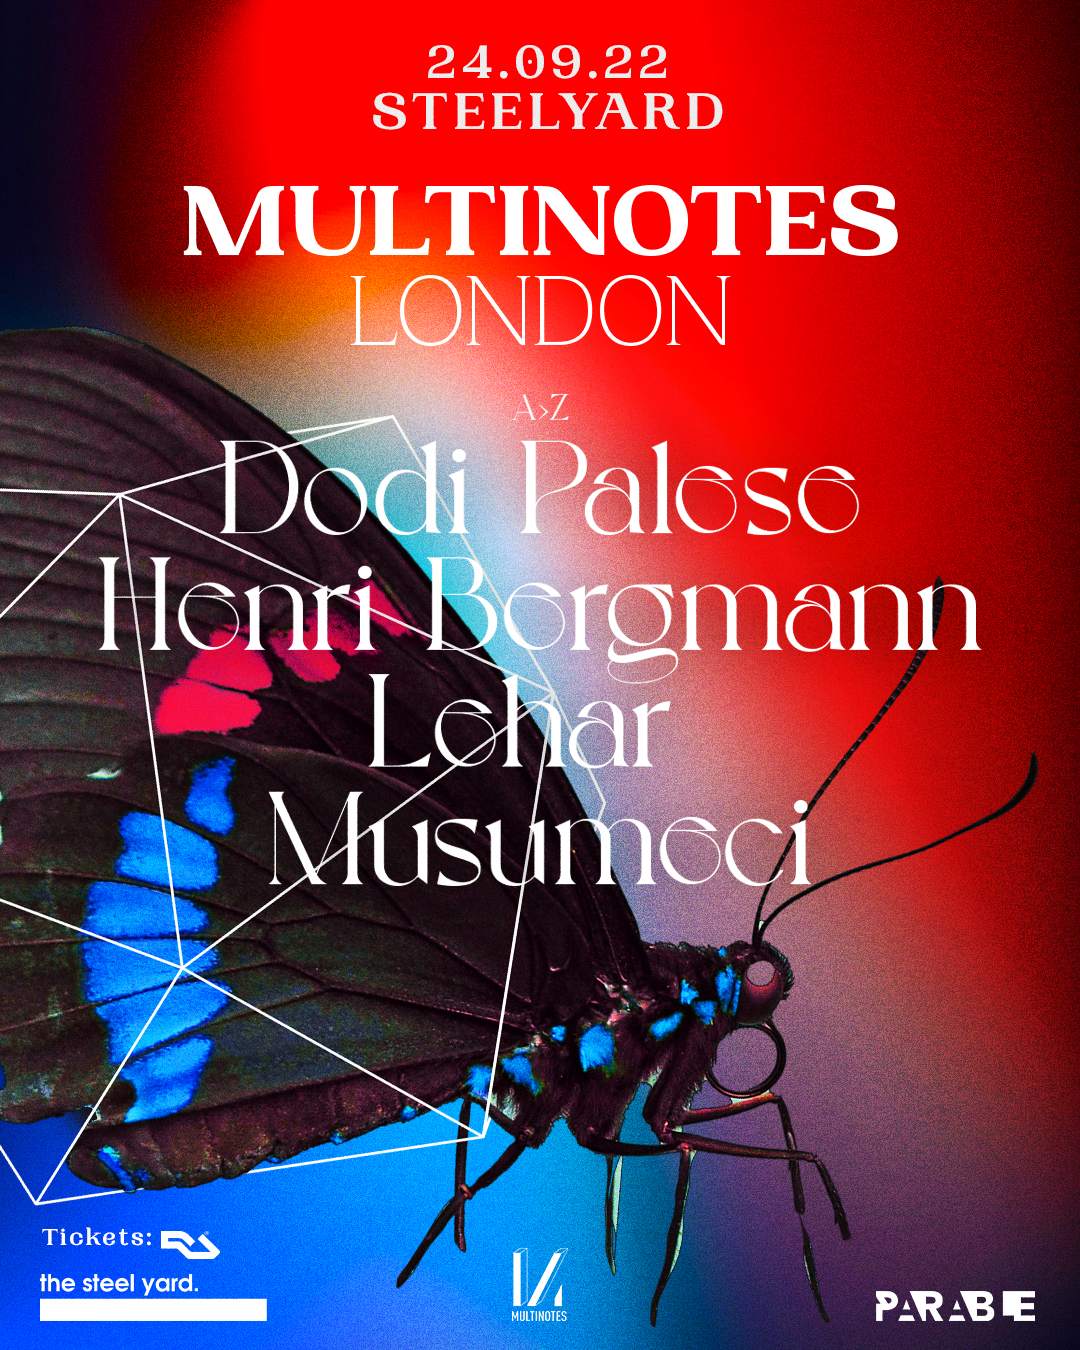 Multinotes London with Lehar, Musumeci, Dodi Palese, Henri Bergmann - フライヤー表